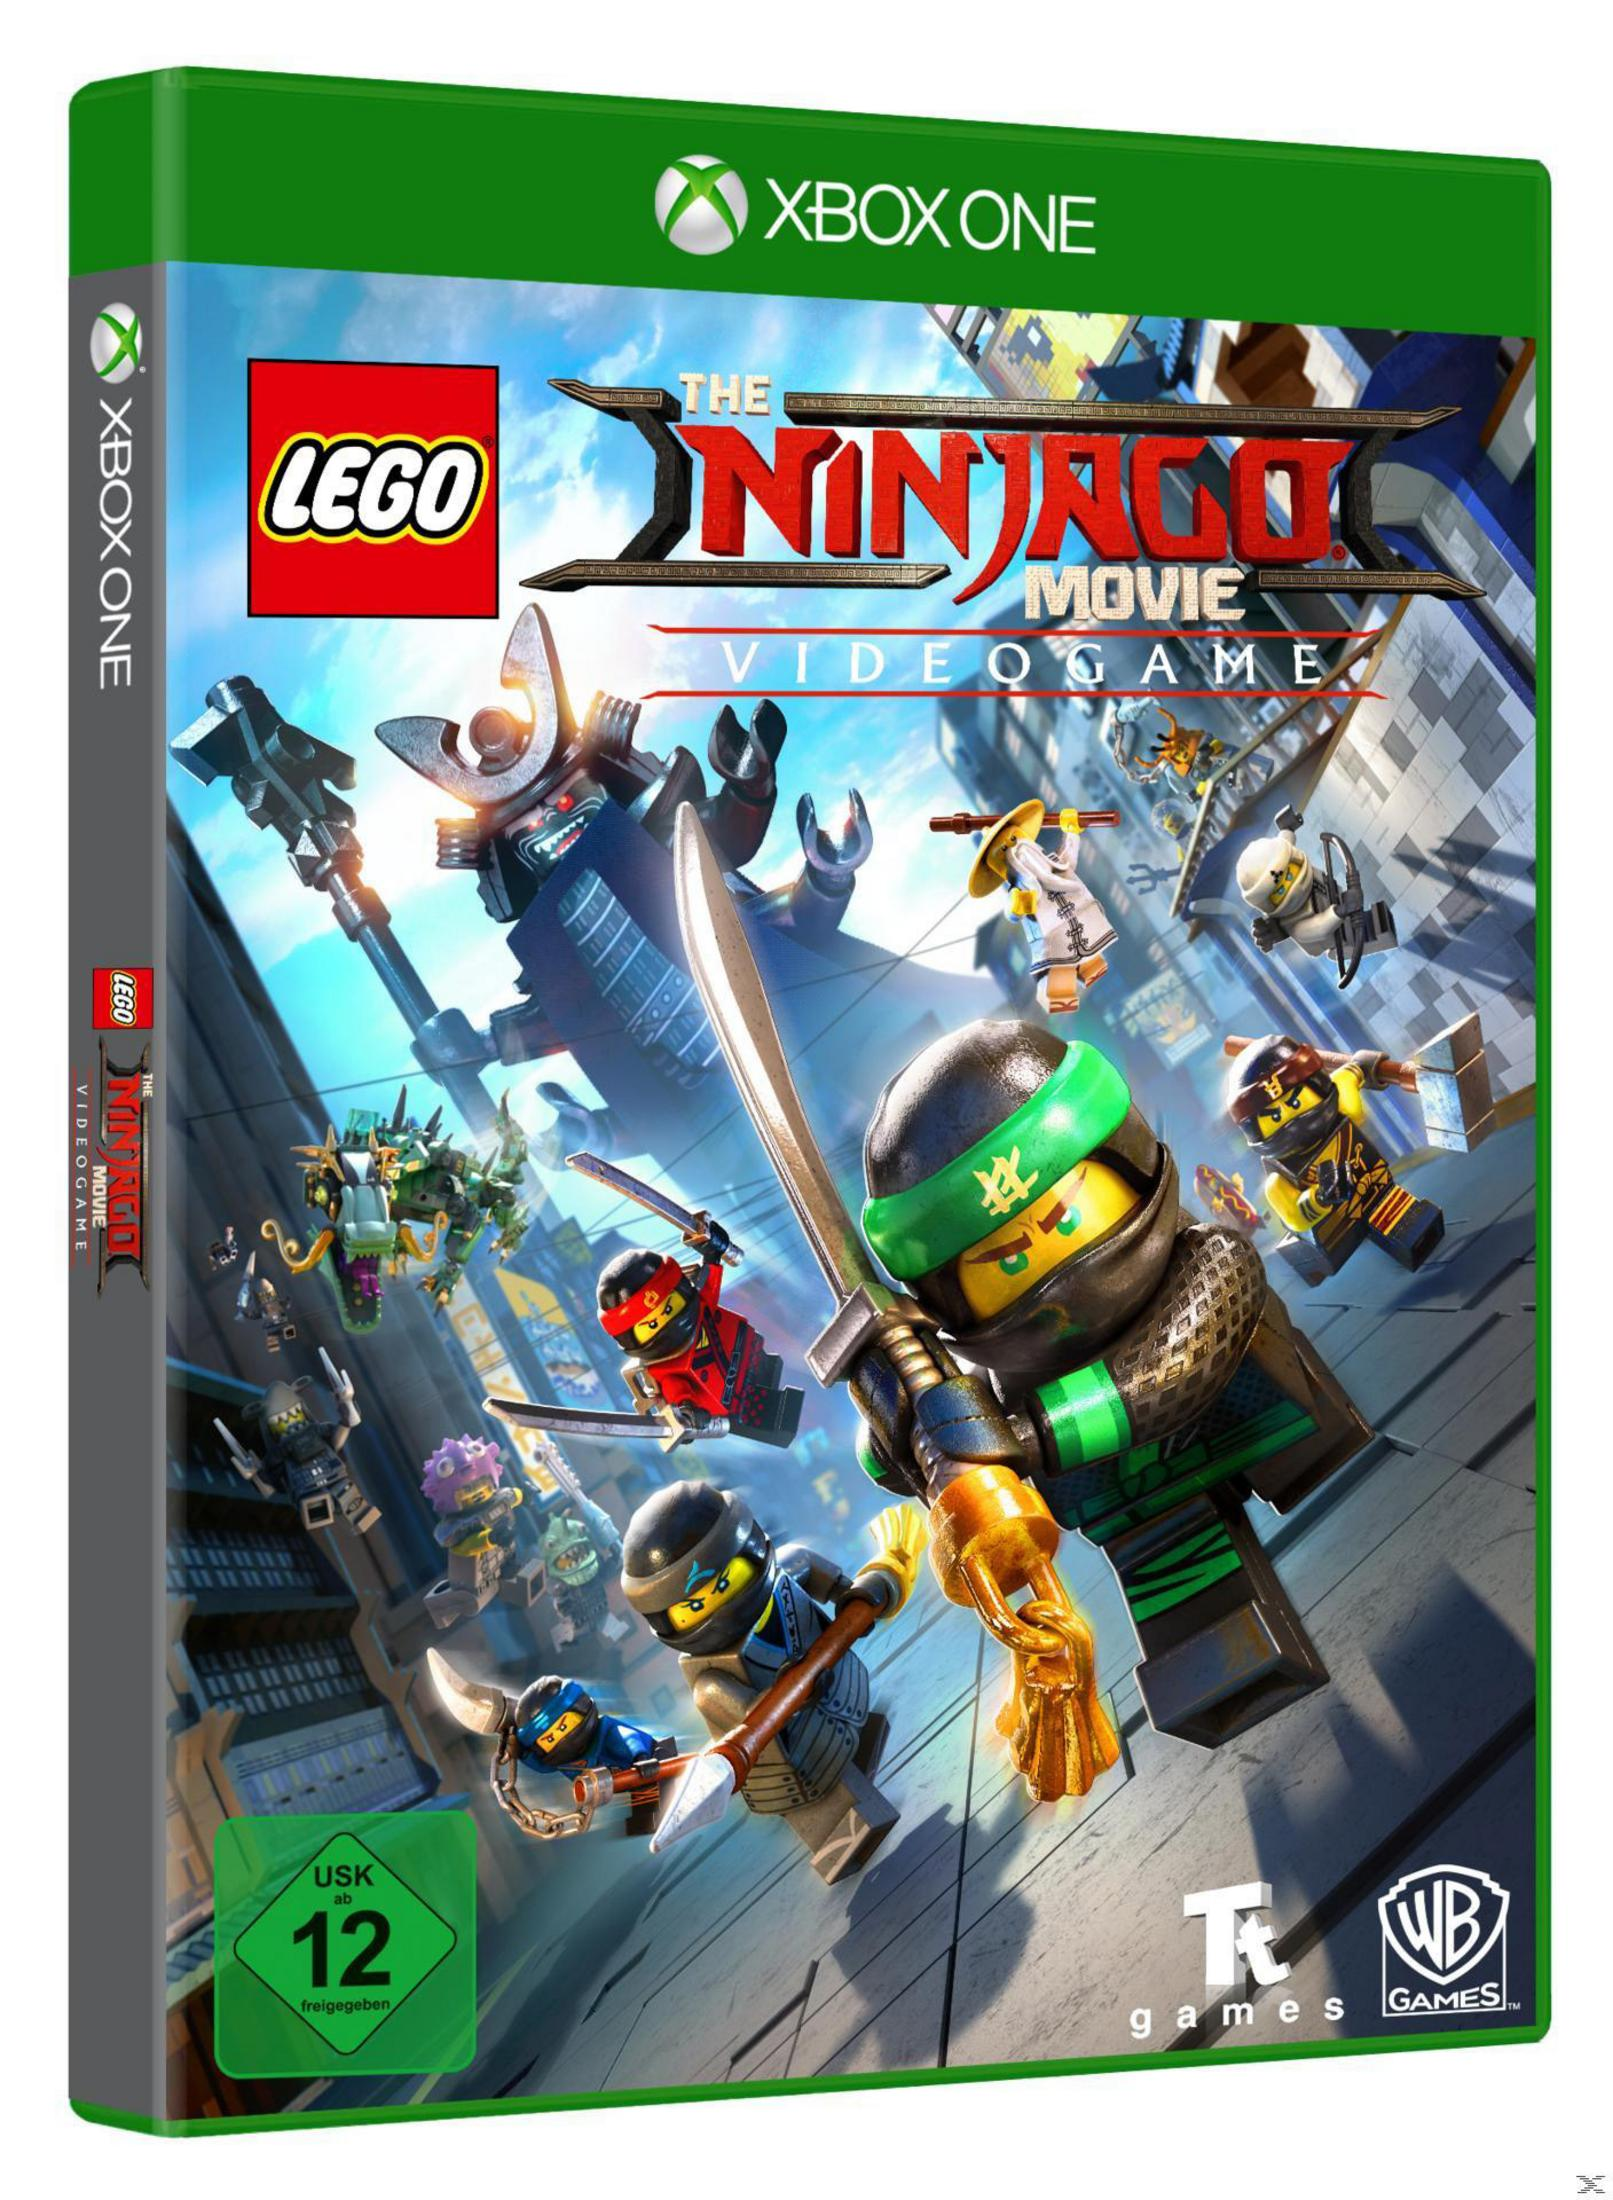 The LEGO Ninjago - Movie [Xbox One] Videogame